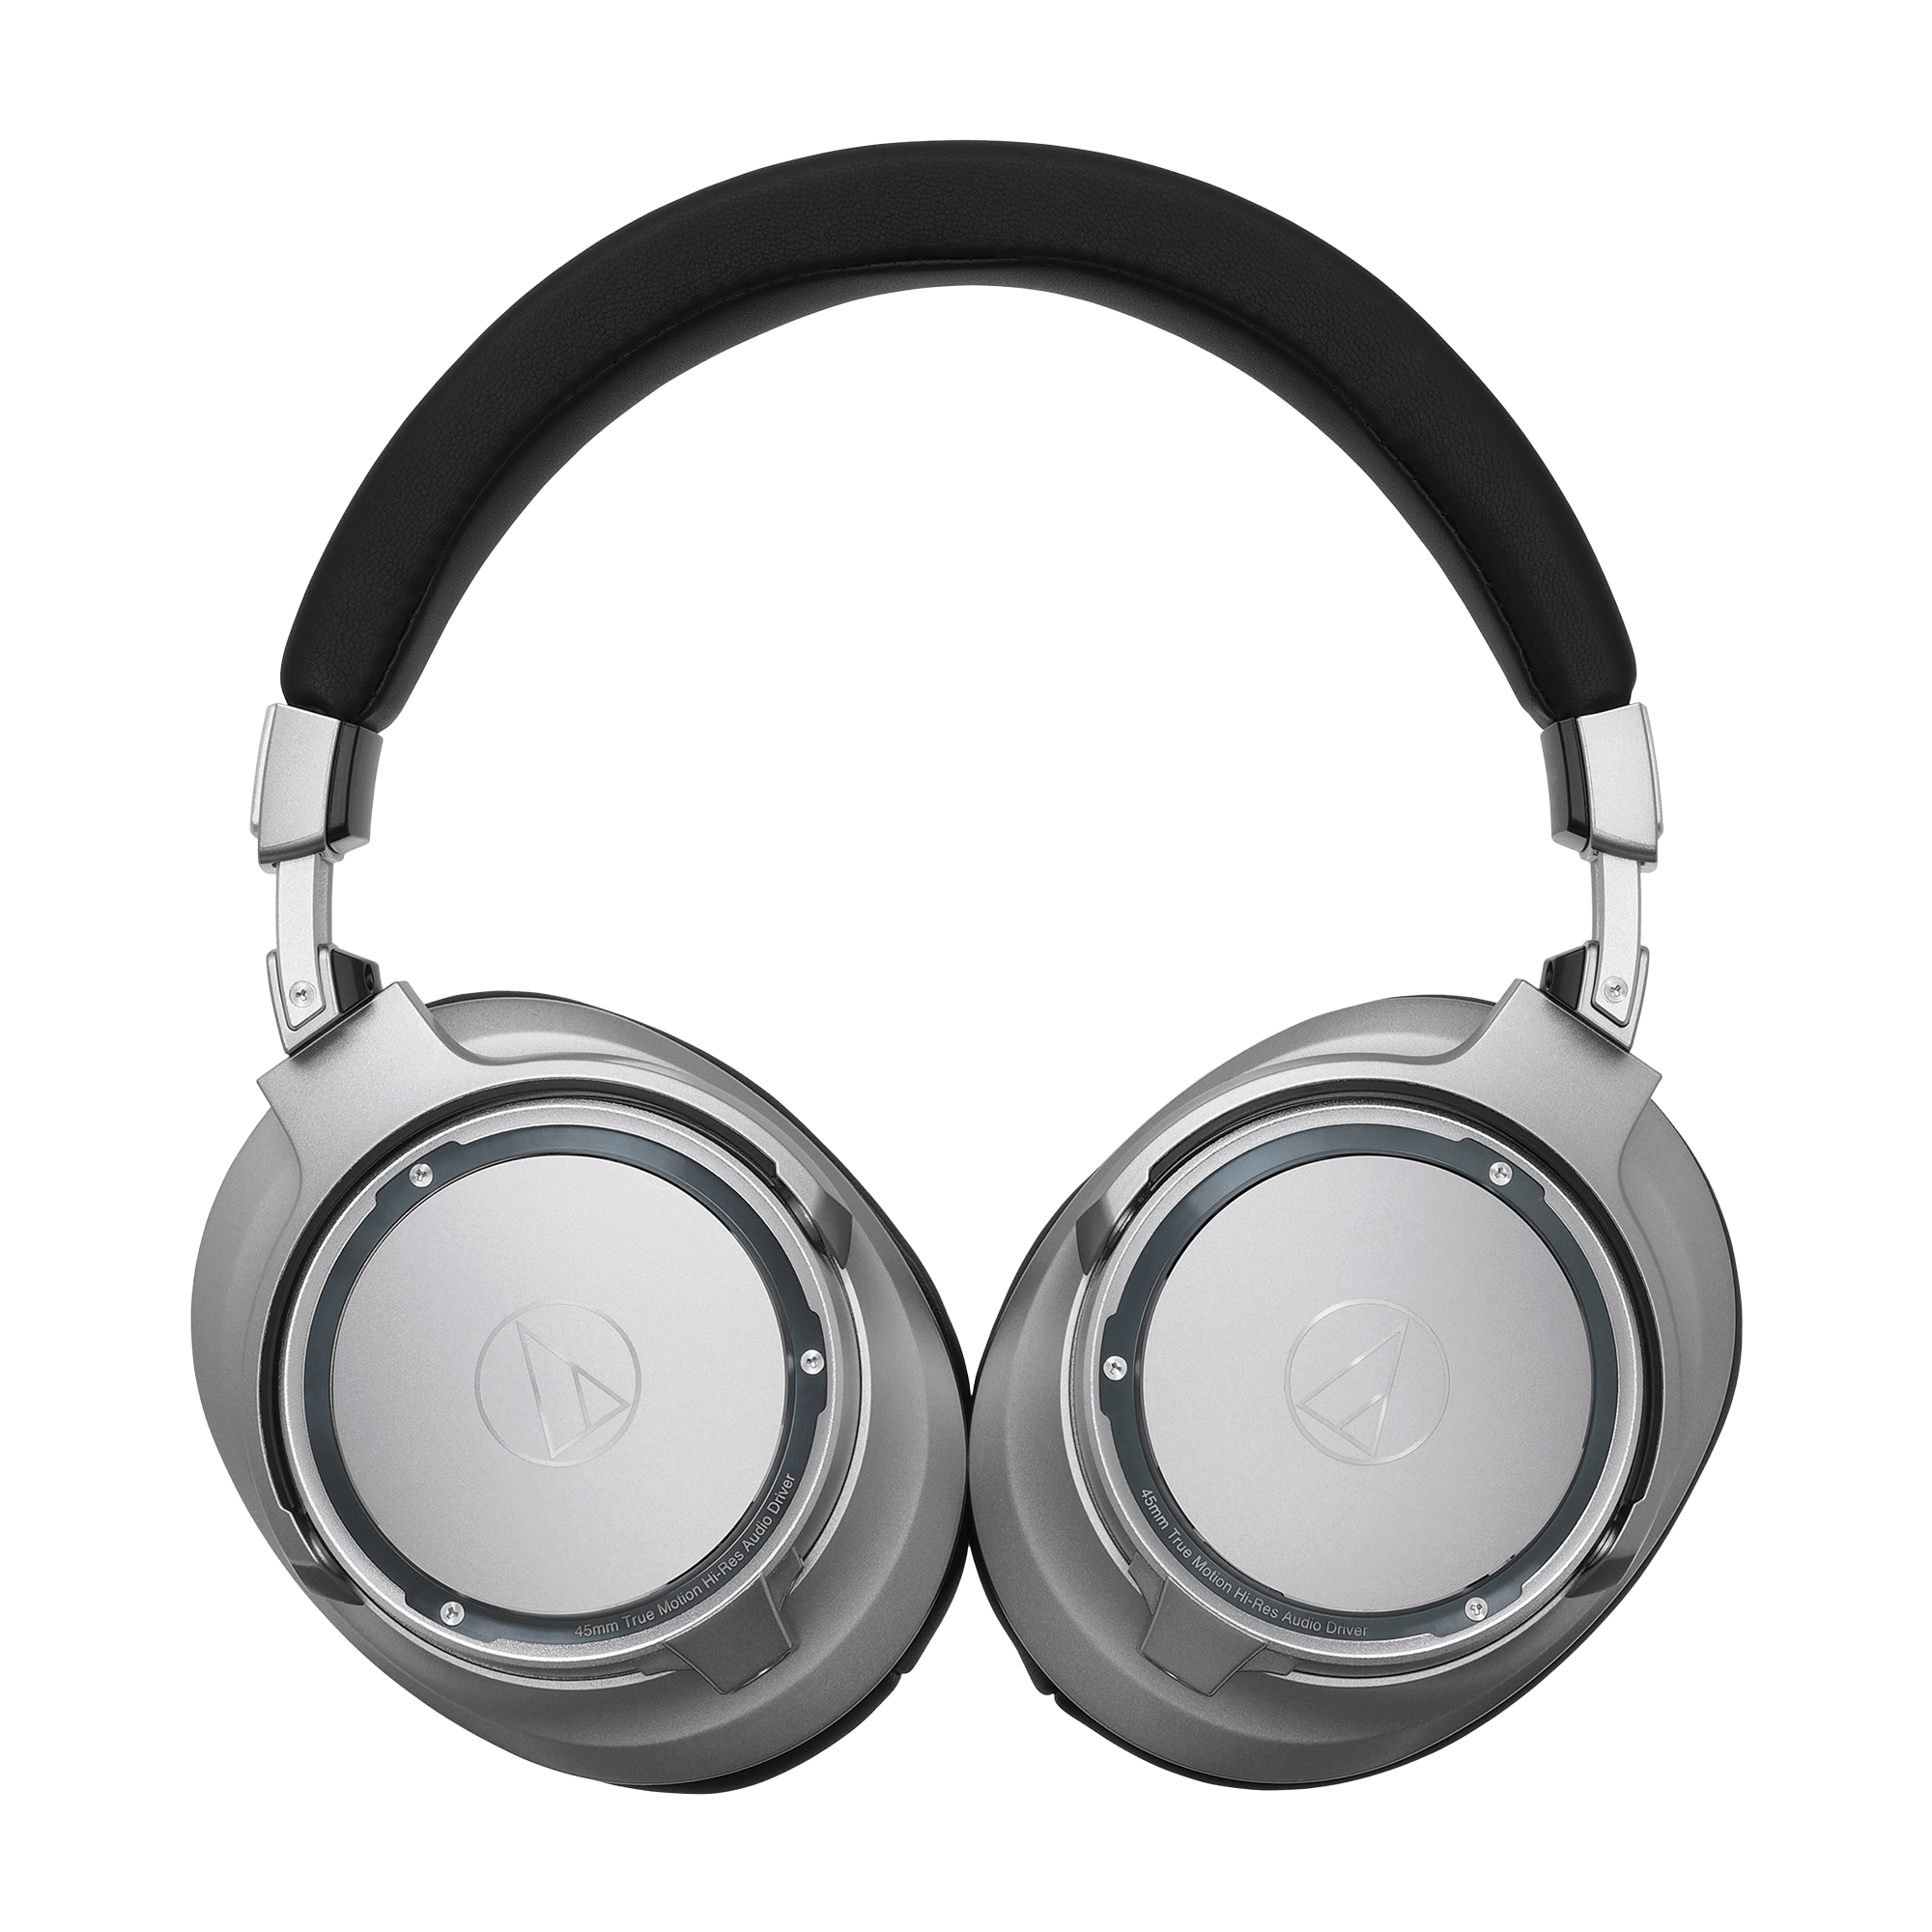 ATH-SR9High-Resolution Over-Ear Headphones | Audio-Technica